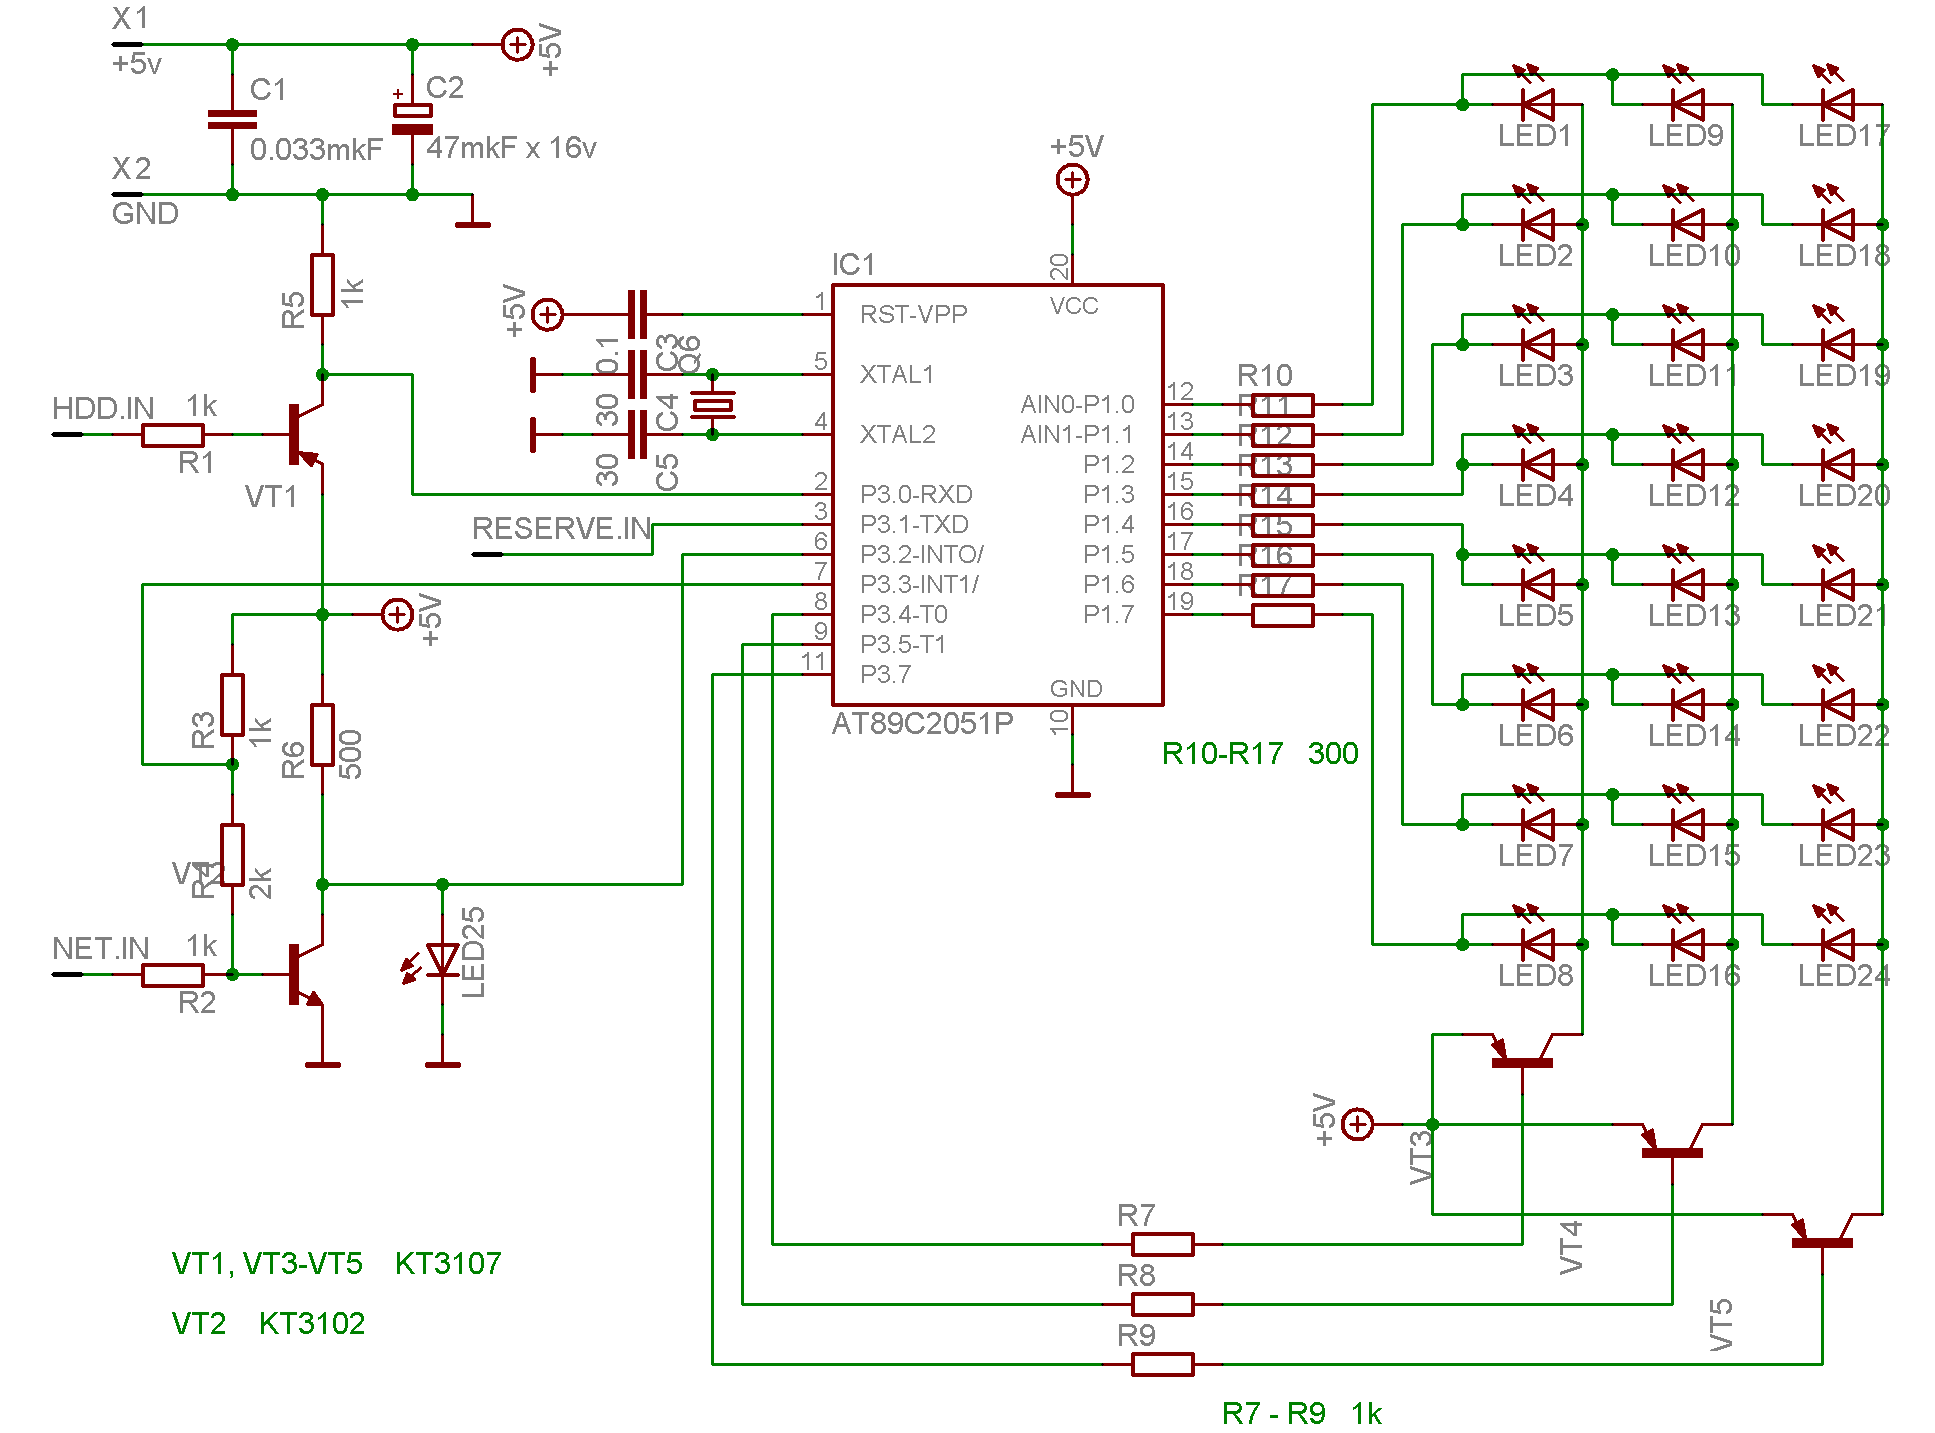 LED computer activity indicator - circuit